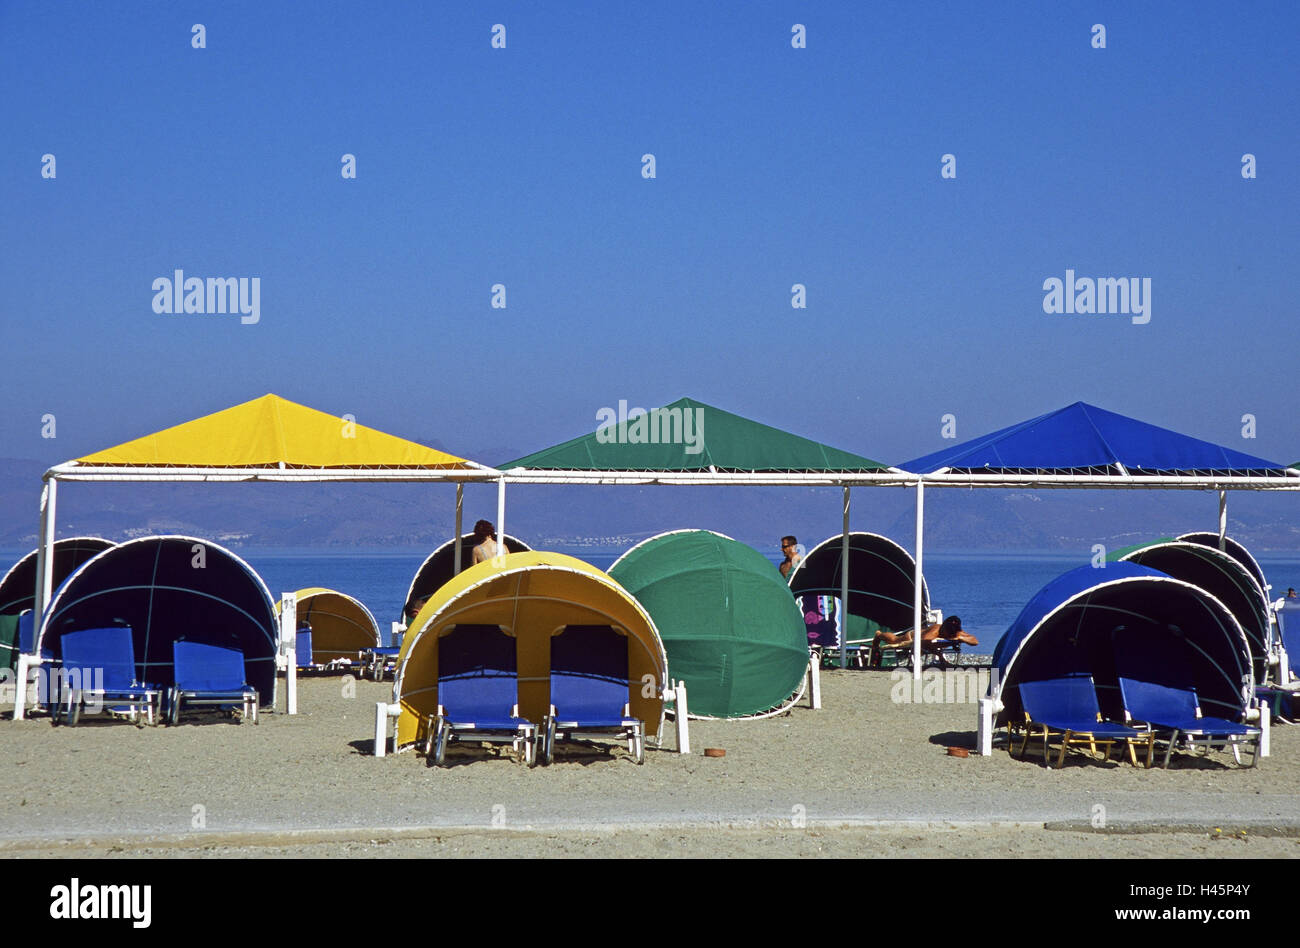 Greece, Fondling, Principal place Fondling, Psalidi, beach 'Akrotiri Louros', lying, sunscreen, Stock Photo